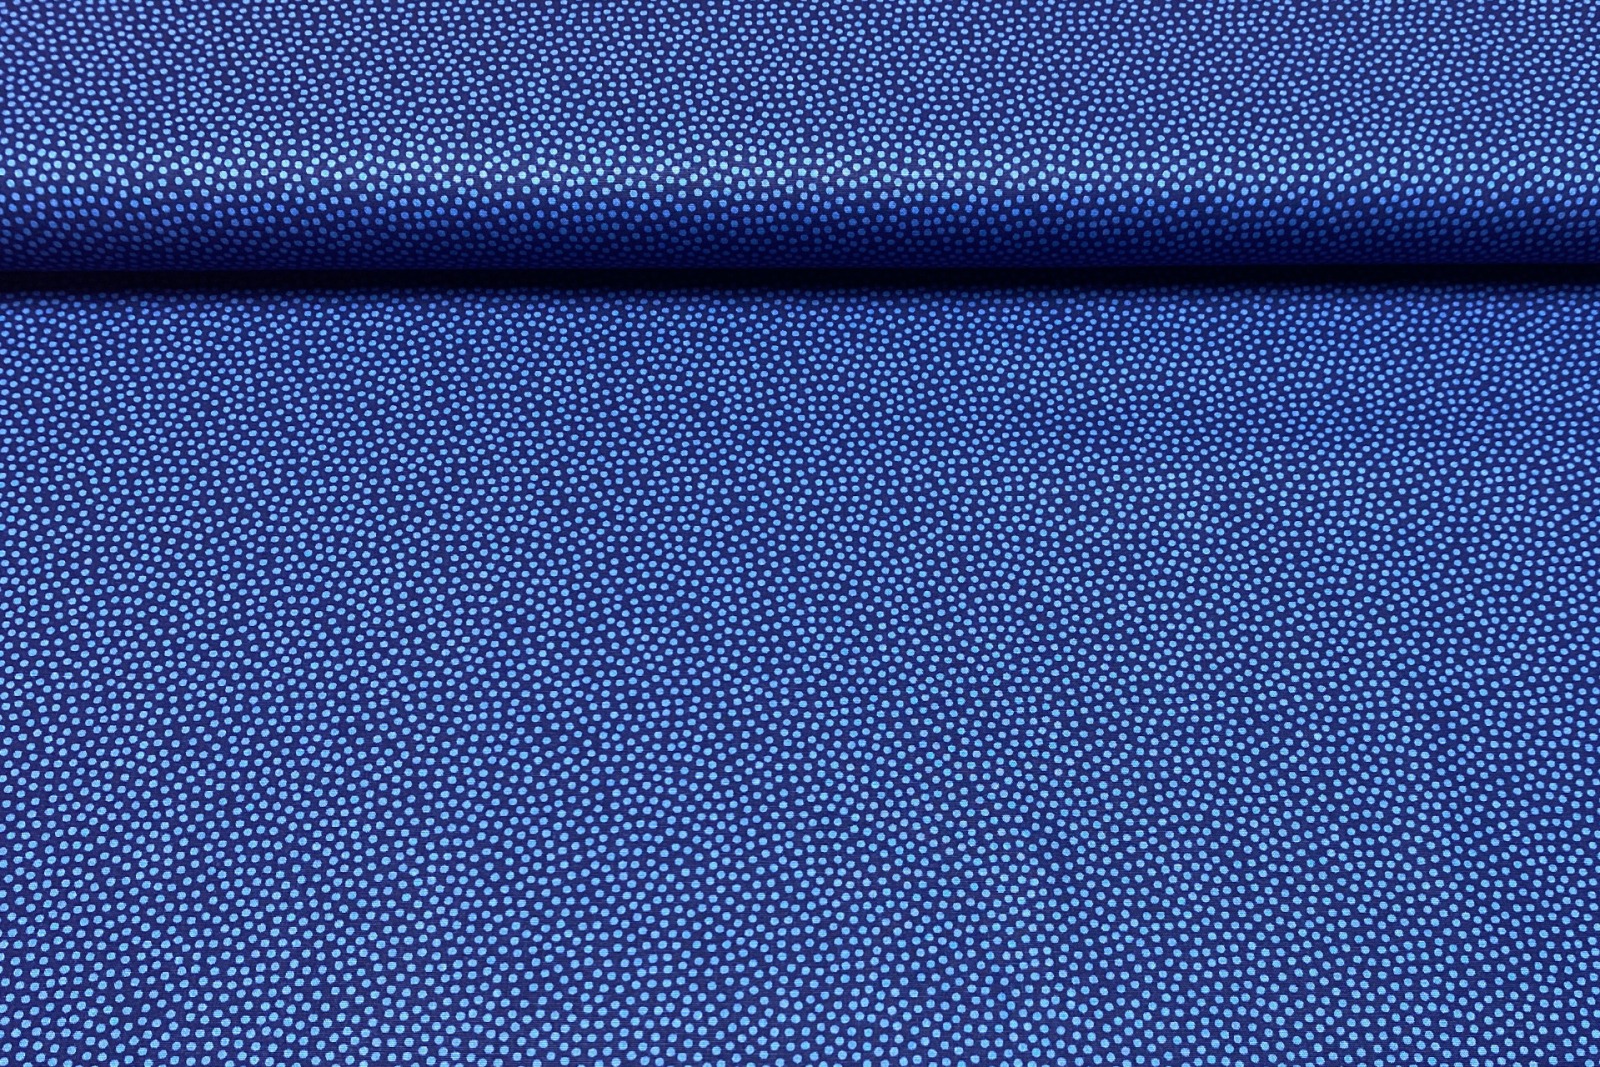 Baumwollwebware - unregelmäßige Punkte - dunkelblau/hellblau - 100% Baumwolle - Dotty - Swafing 2